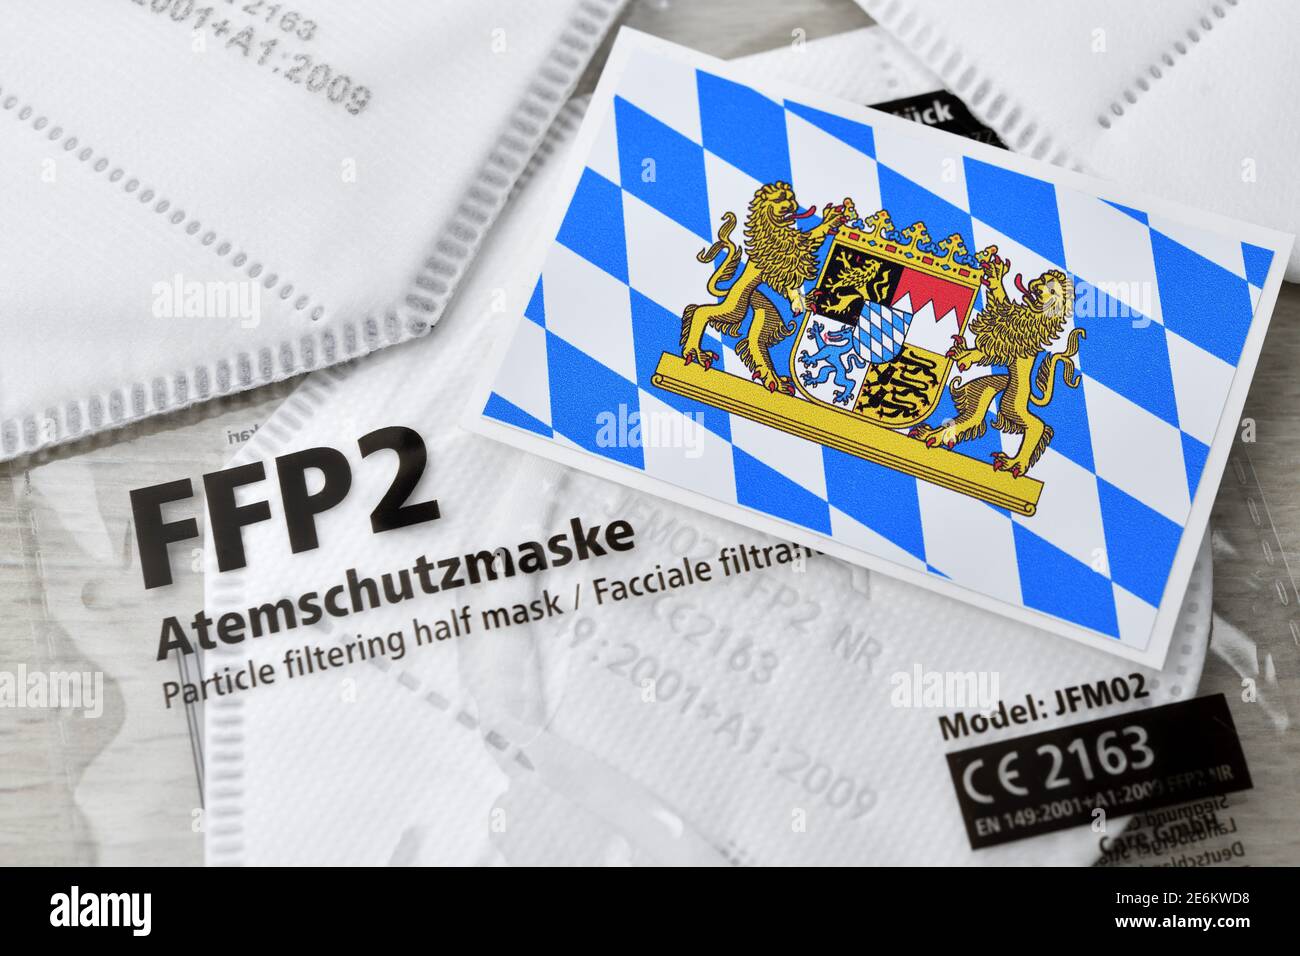 FFP2 Face Masks And Bavarian Coat Of Arms, Compulsory Masks Stock Photo